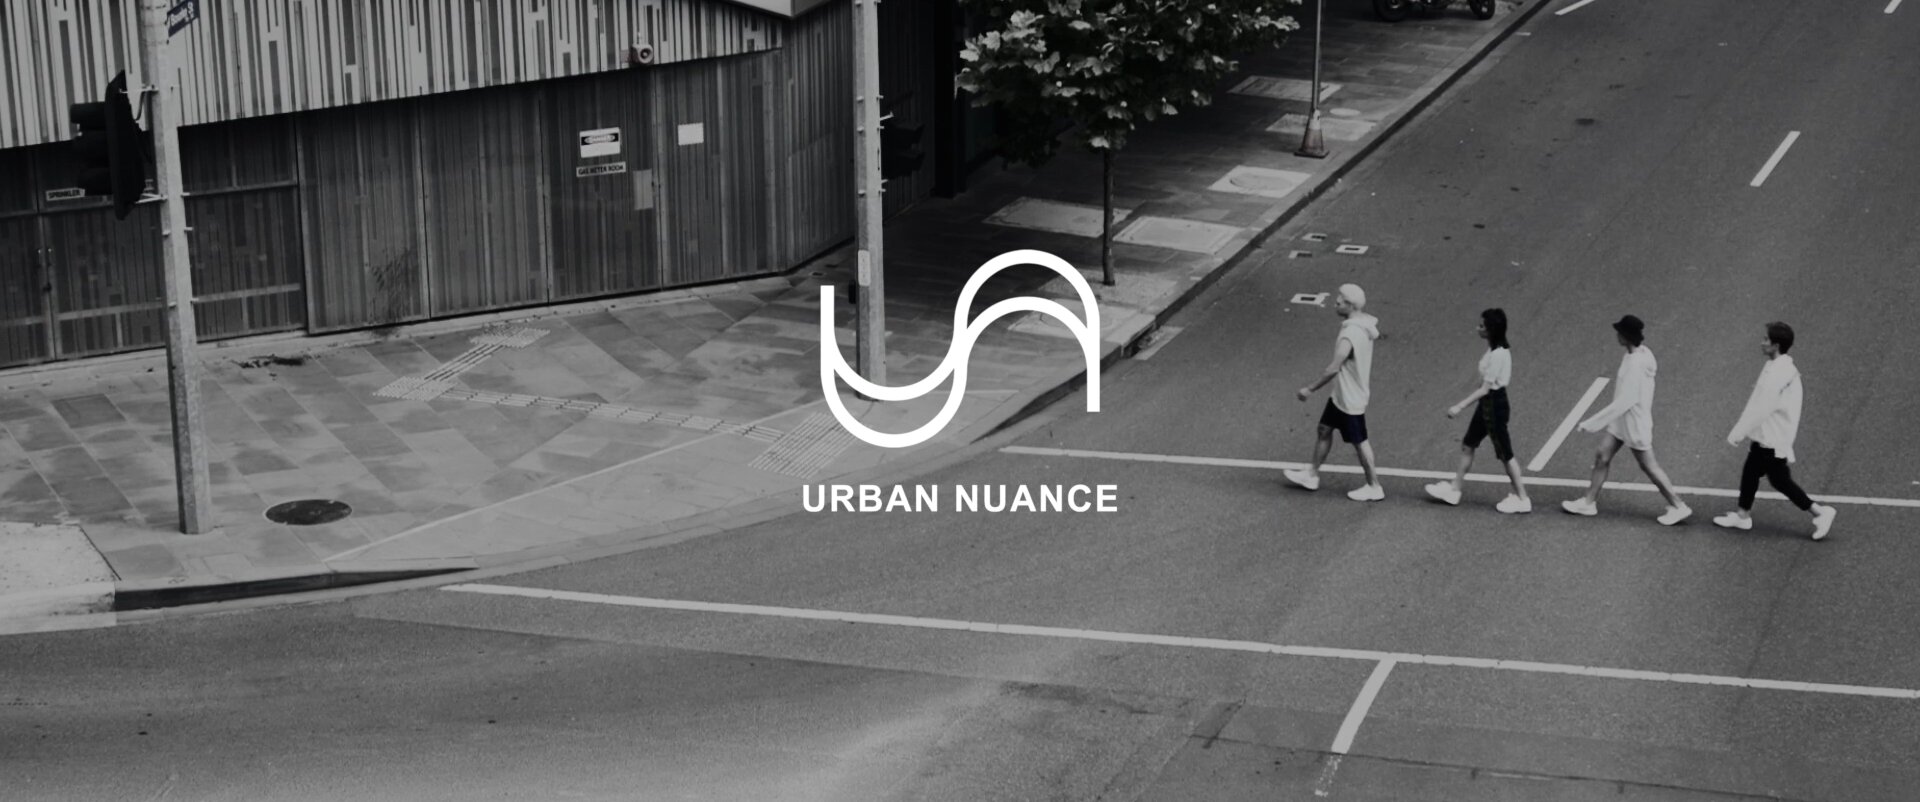 Urban Nuance_1.18.1.jpg